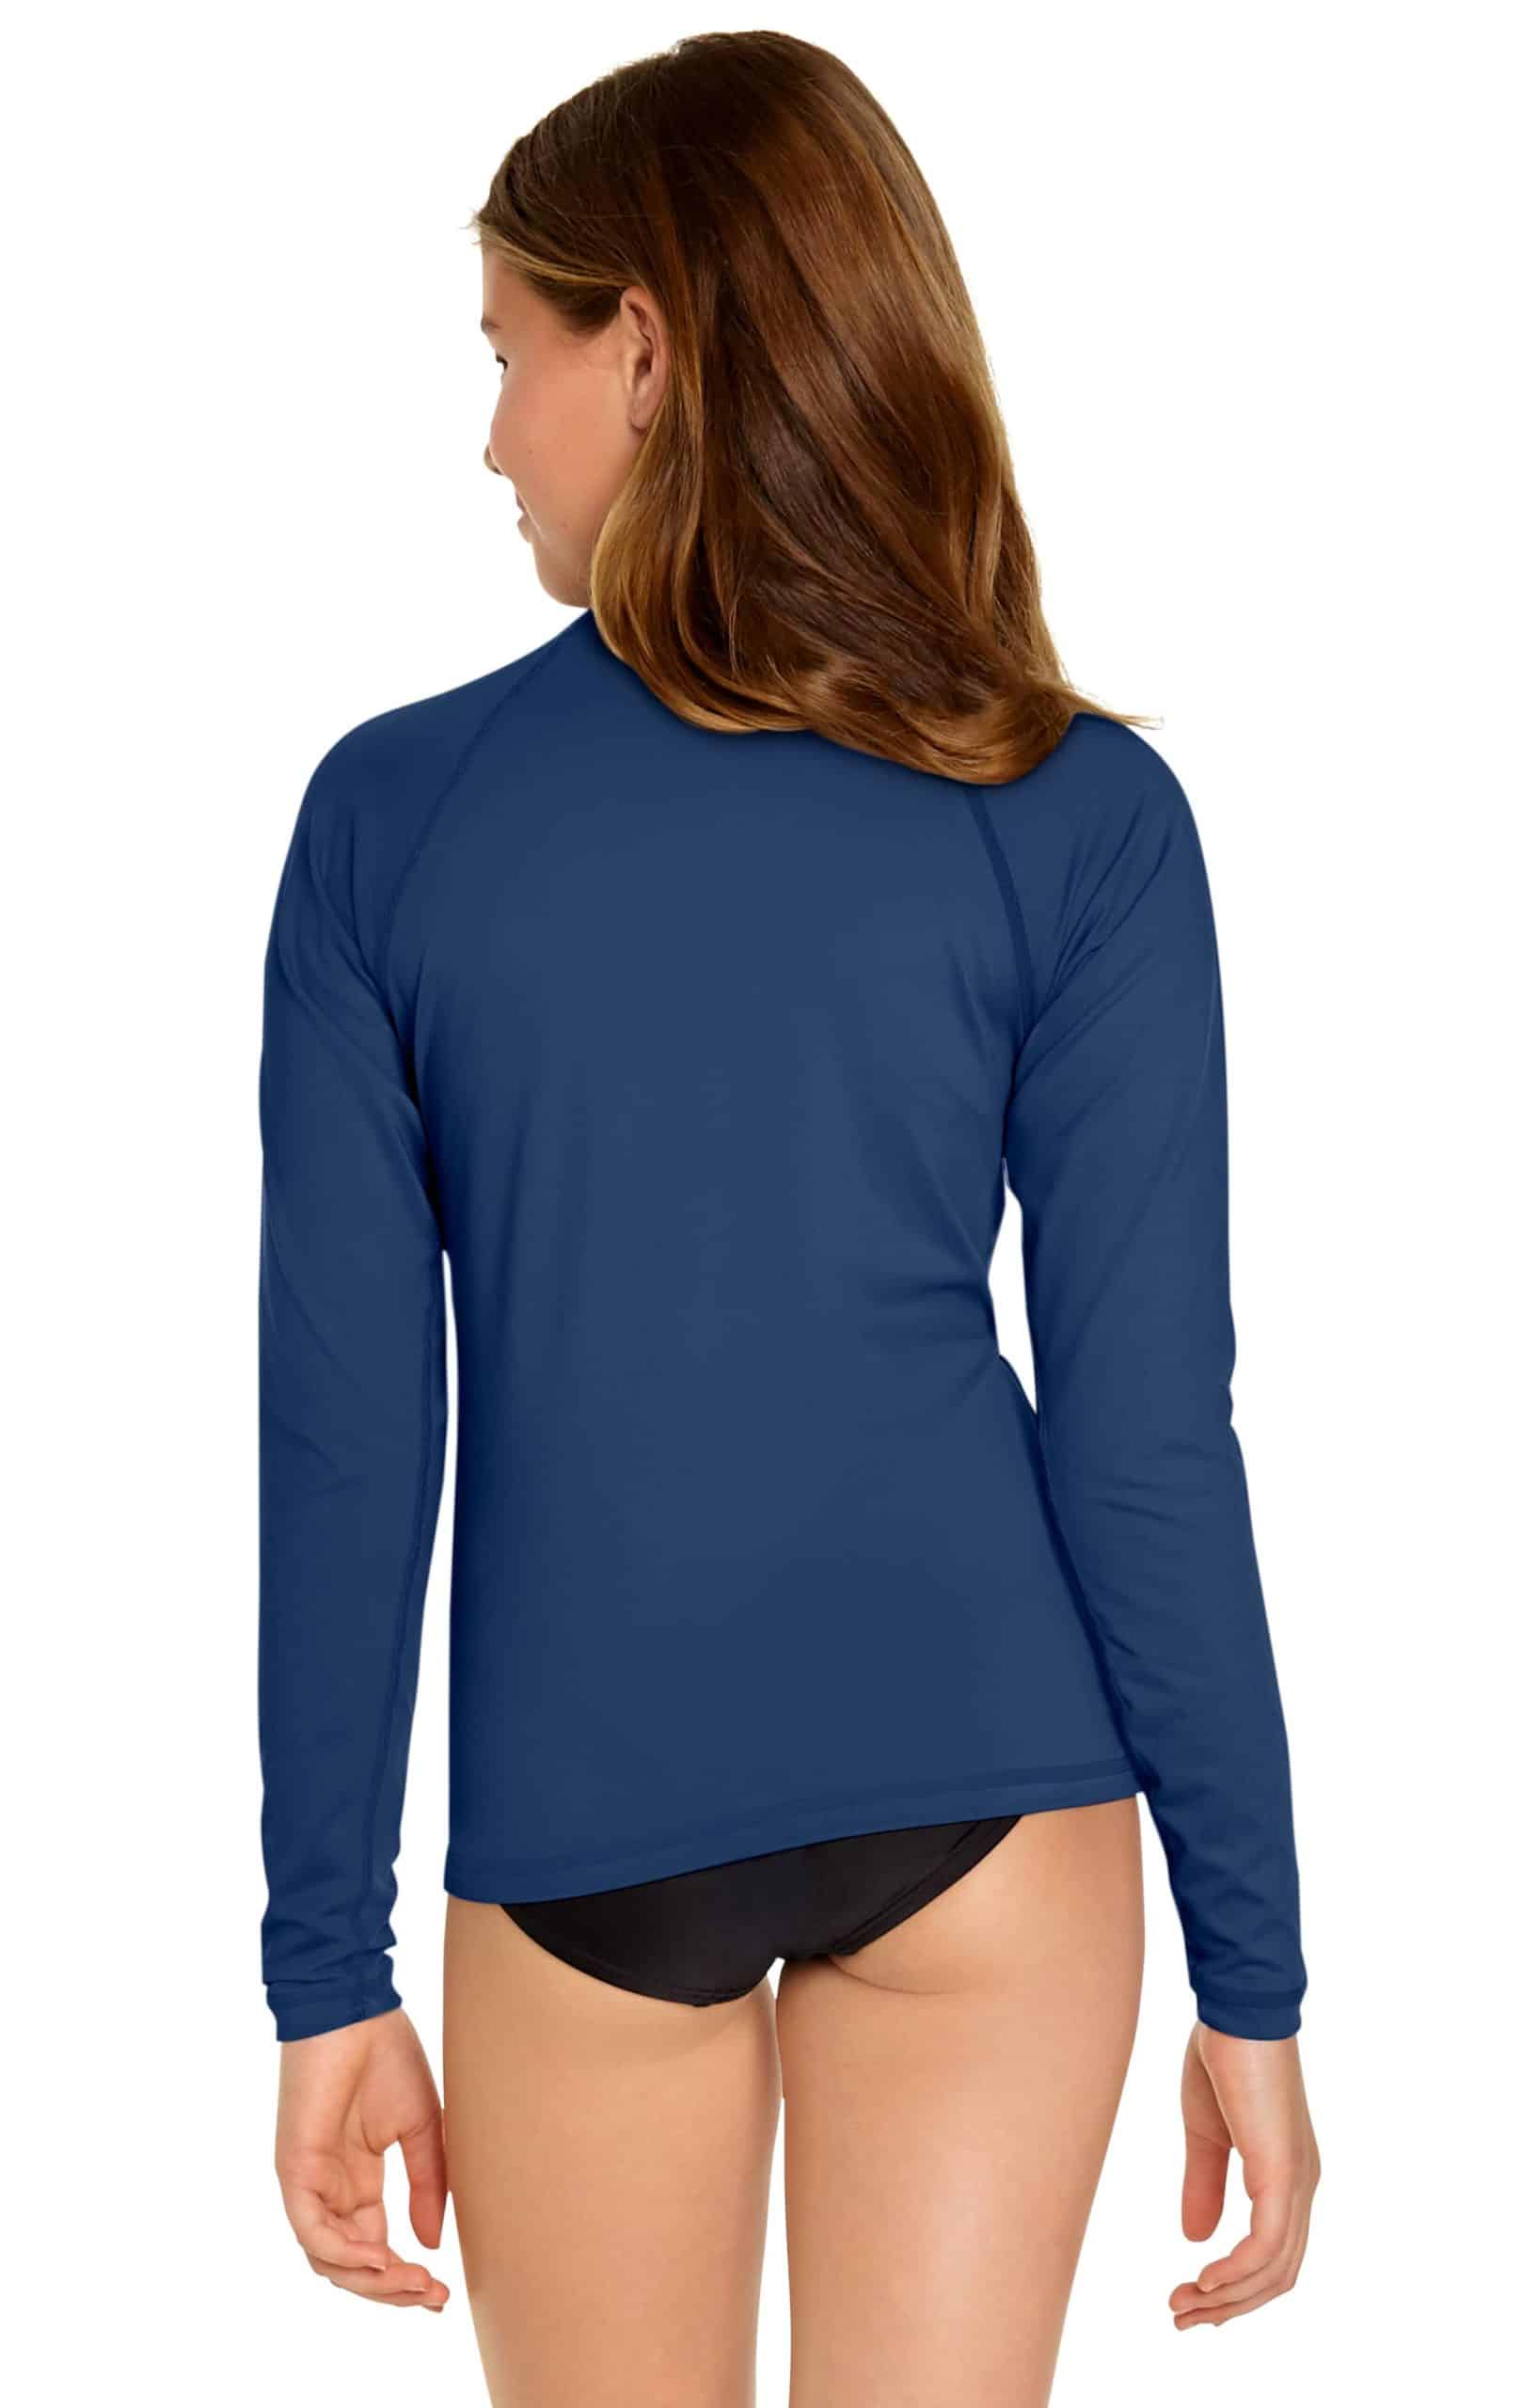 Women's Long Sleeve Rash Guard – Royal Blue - Wet Effect, Inc.